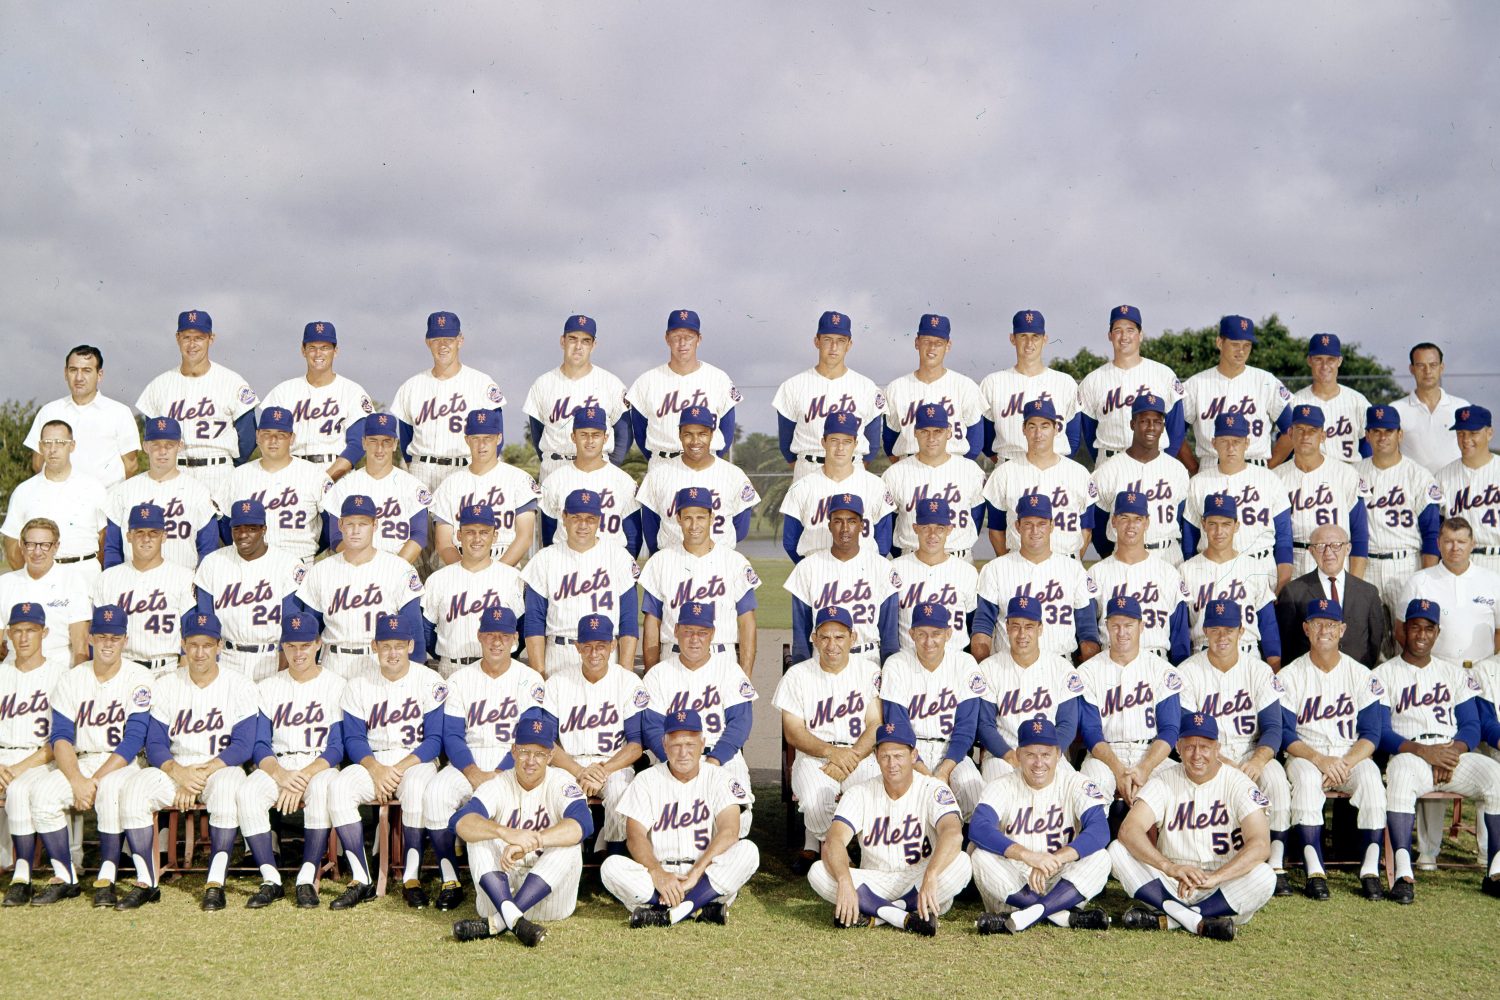 1967 Mets Team Photo